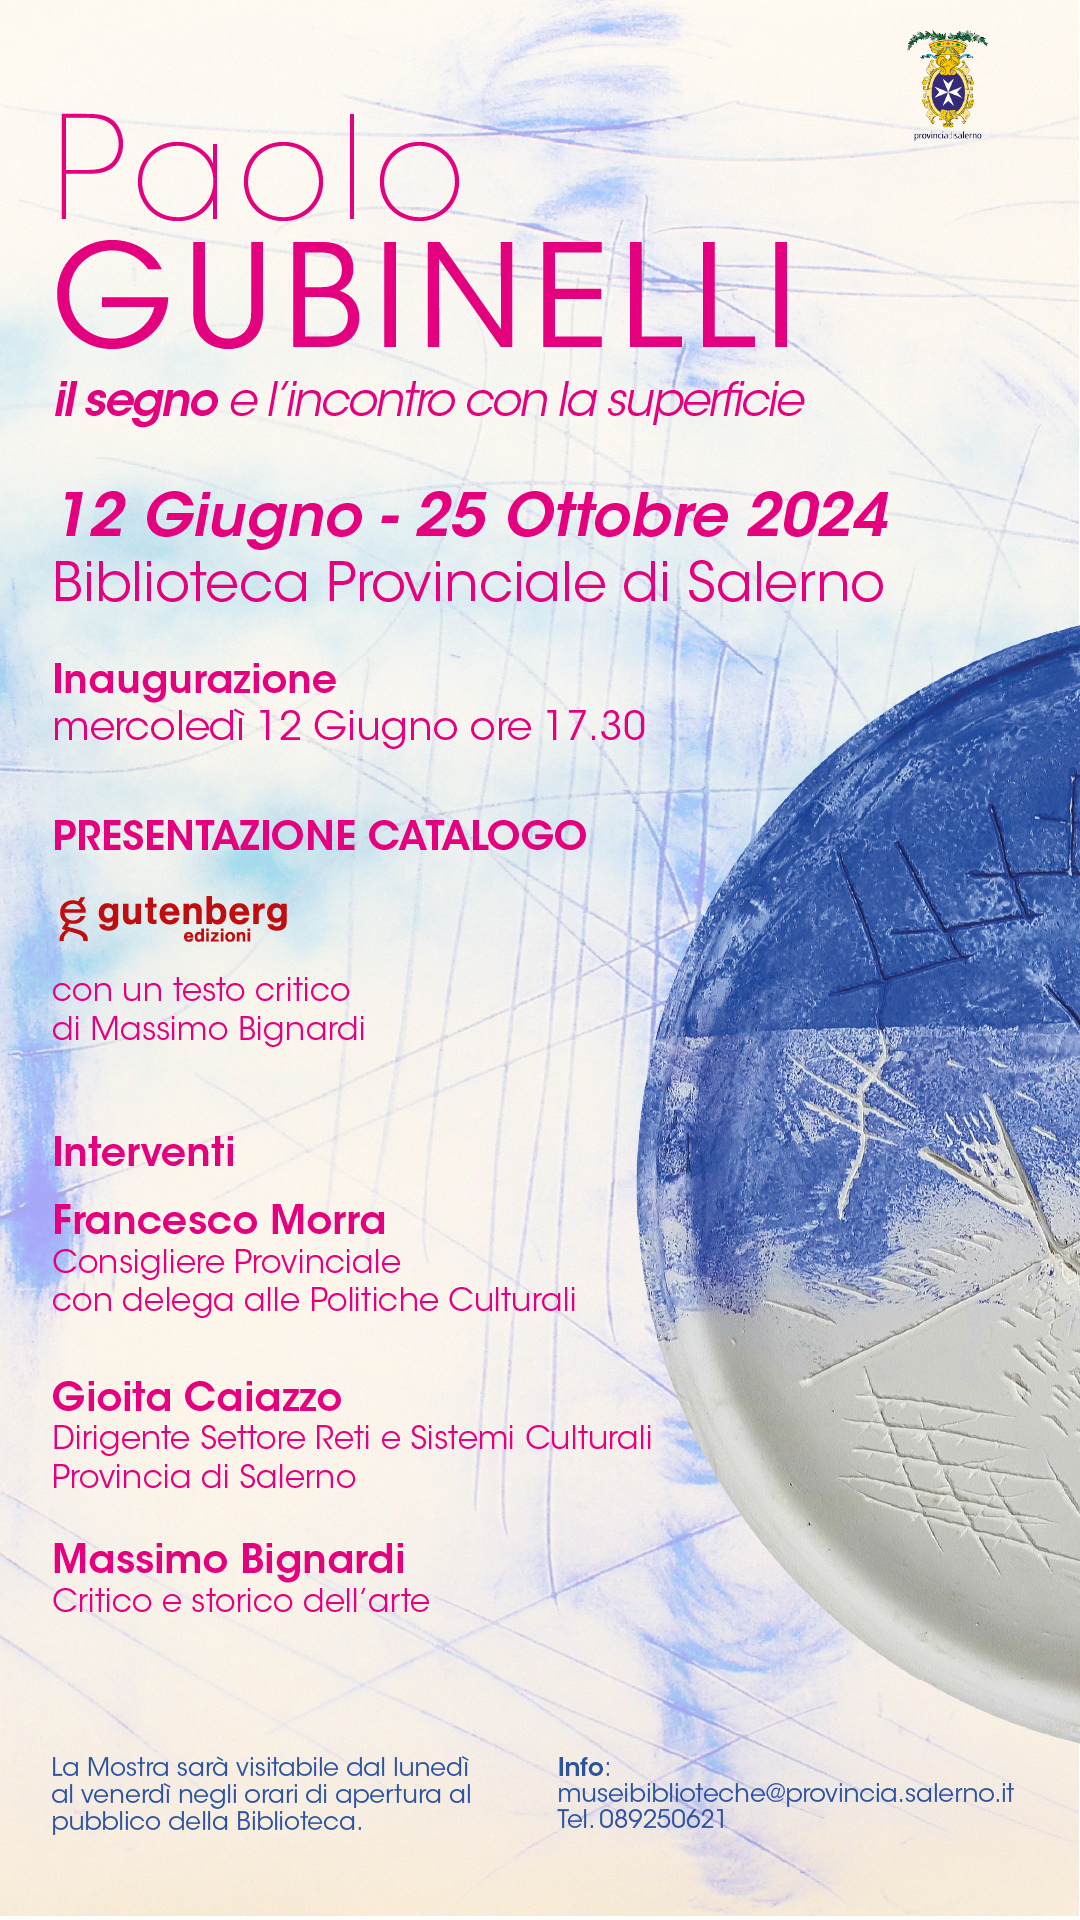 Salerno: opening mostra di Paolo Gubinelli a Biblioteca provinciale